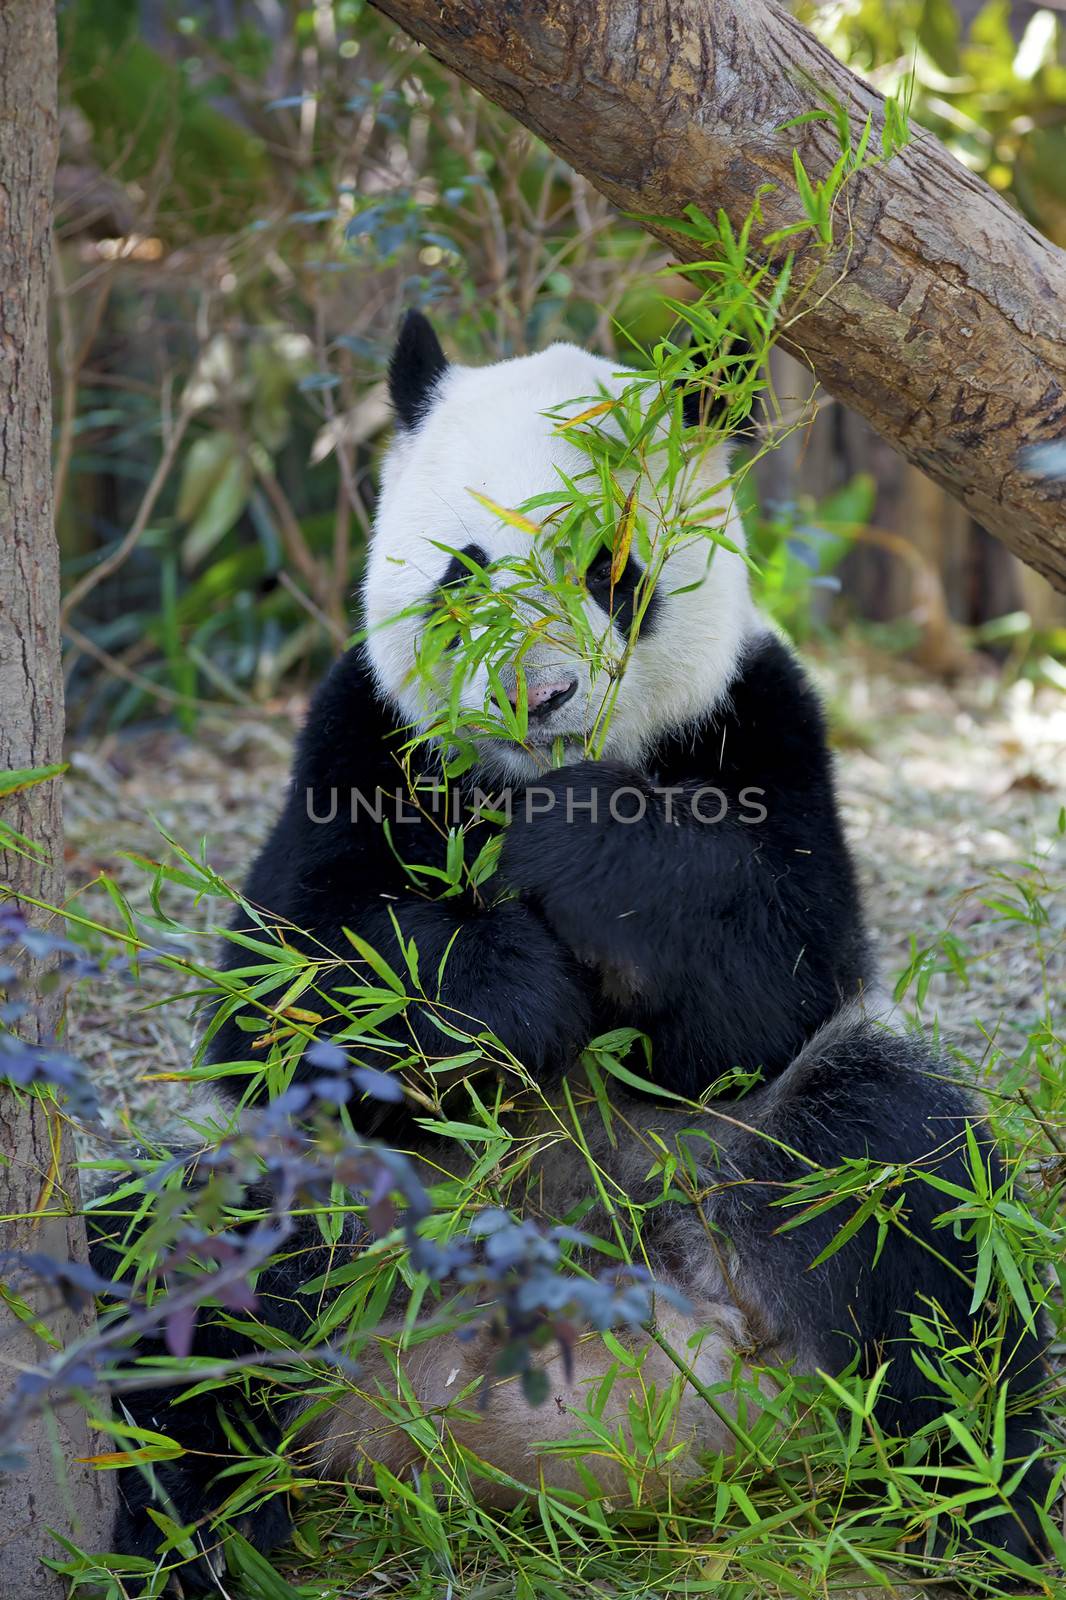 Giant Panda bear eating bamboo